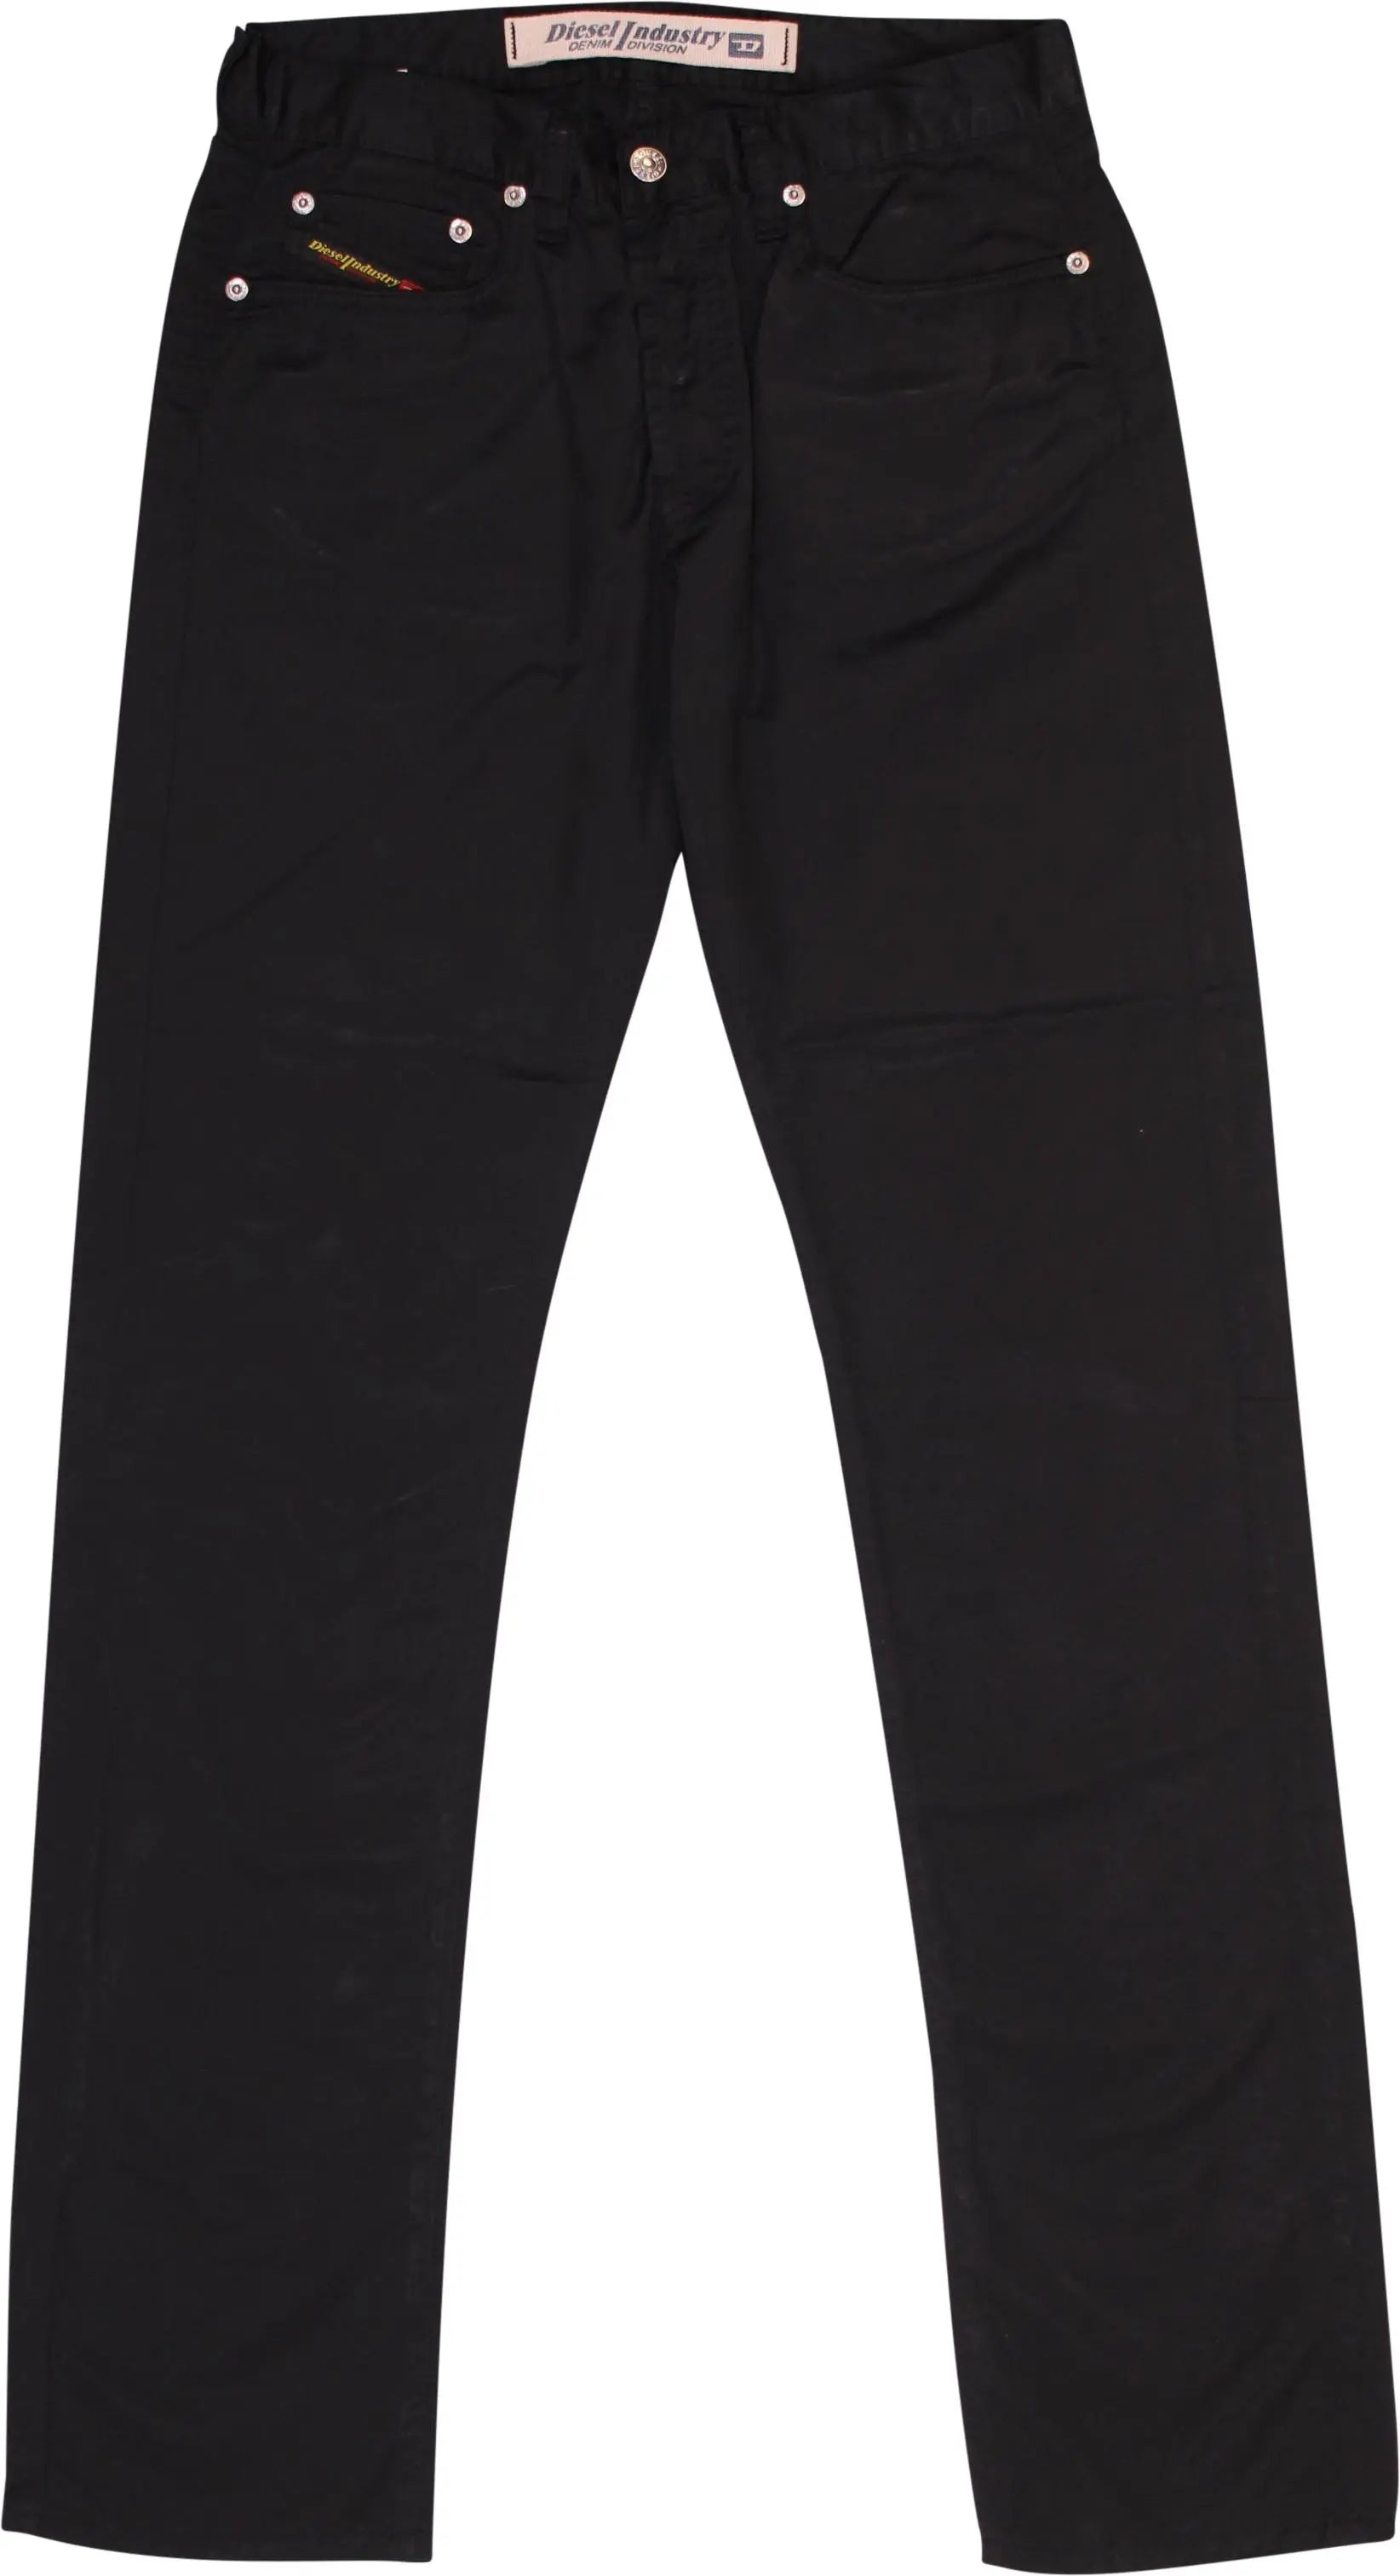 Diesel - Black Pants by Diesel- ThriftTale.com - Vintage and second handclothing